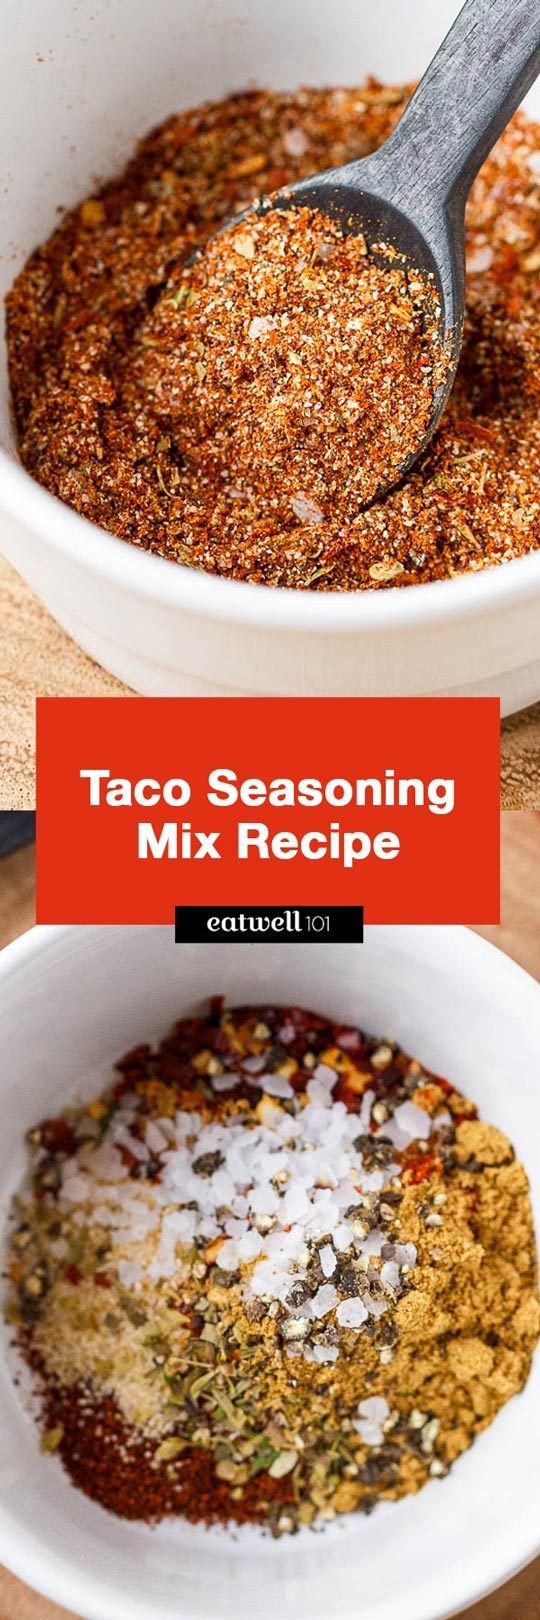 Taco Seasoning Recipe - An easy 5-minute recipe for homemade gluten-free taco seasoning mix!